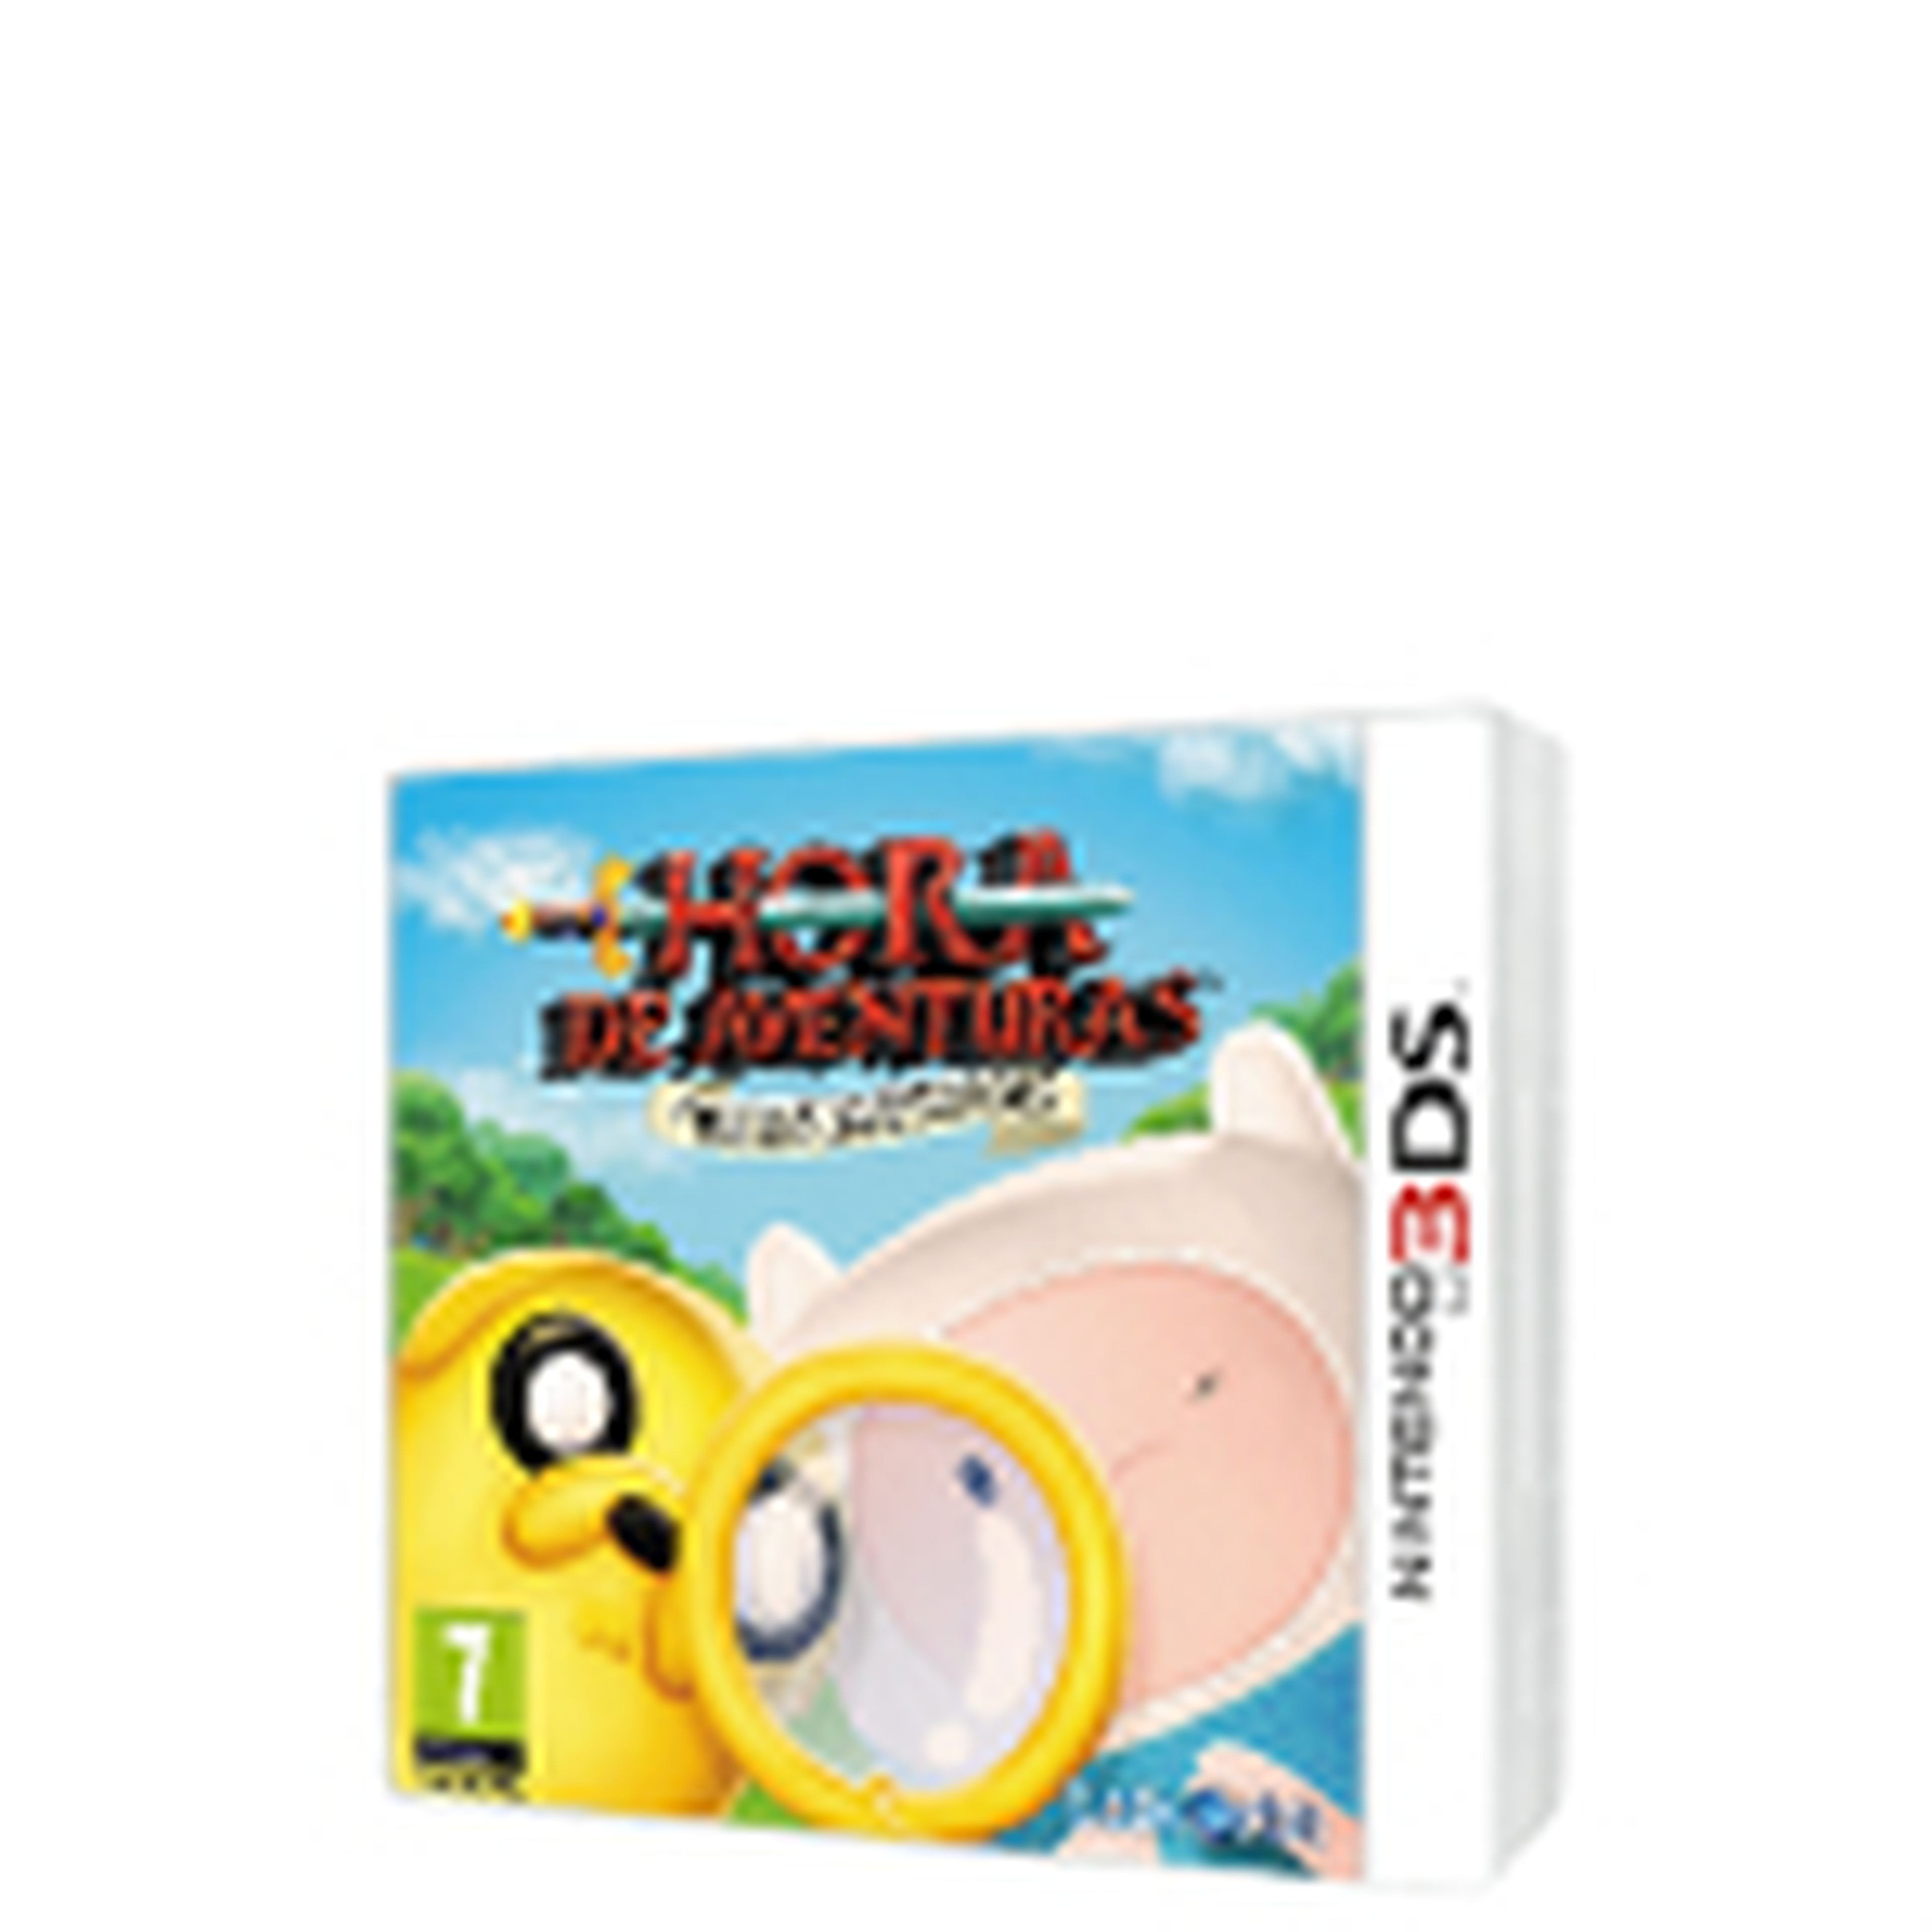 Hora de Aventuras: Finn y Jake, Investigadores para 3DS